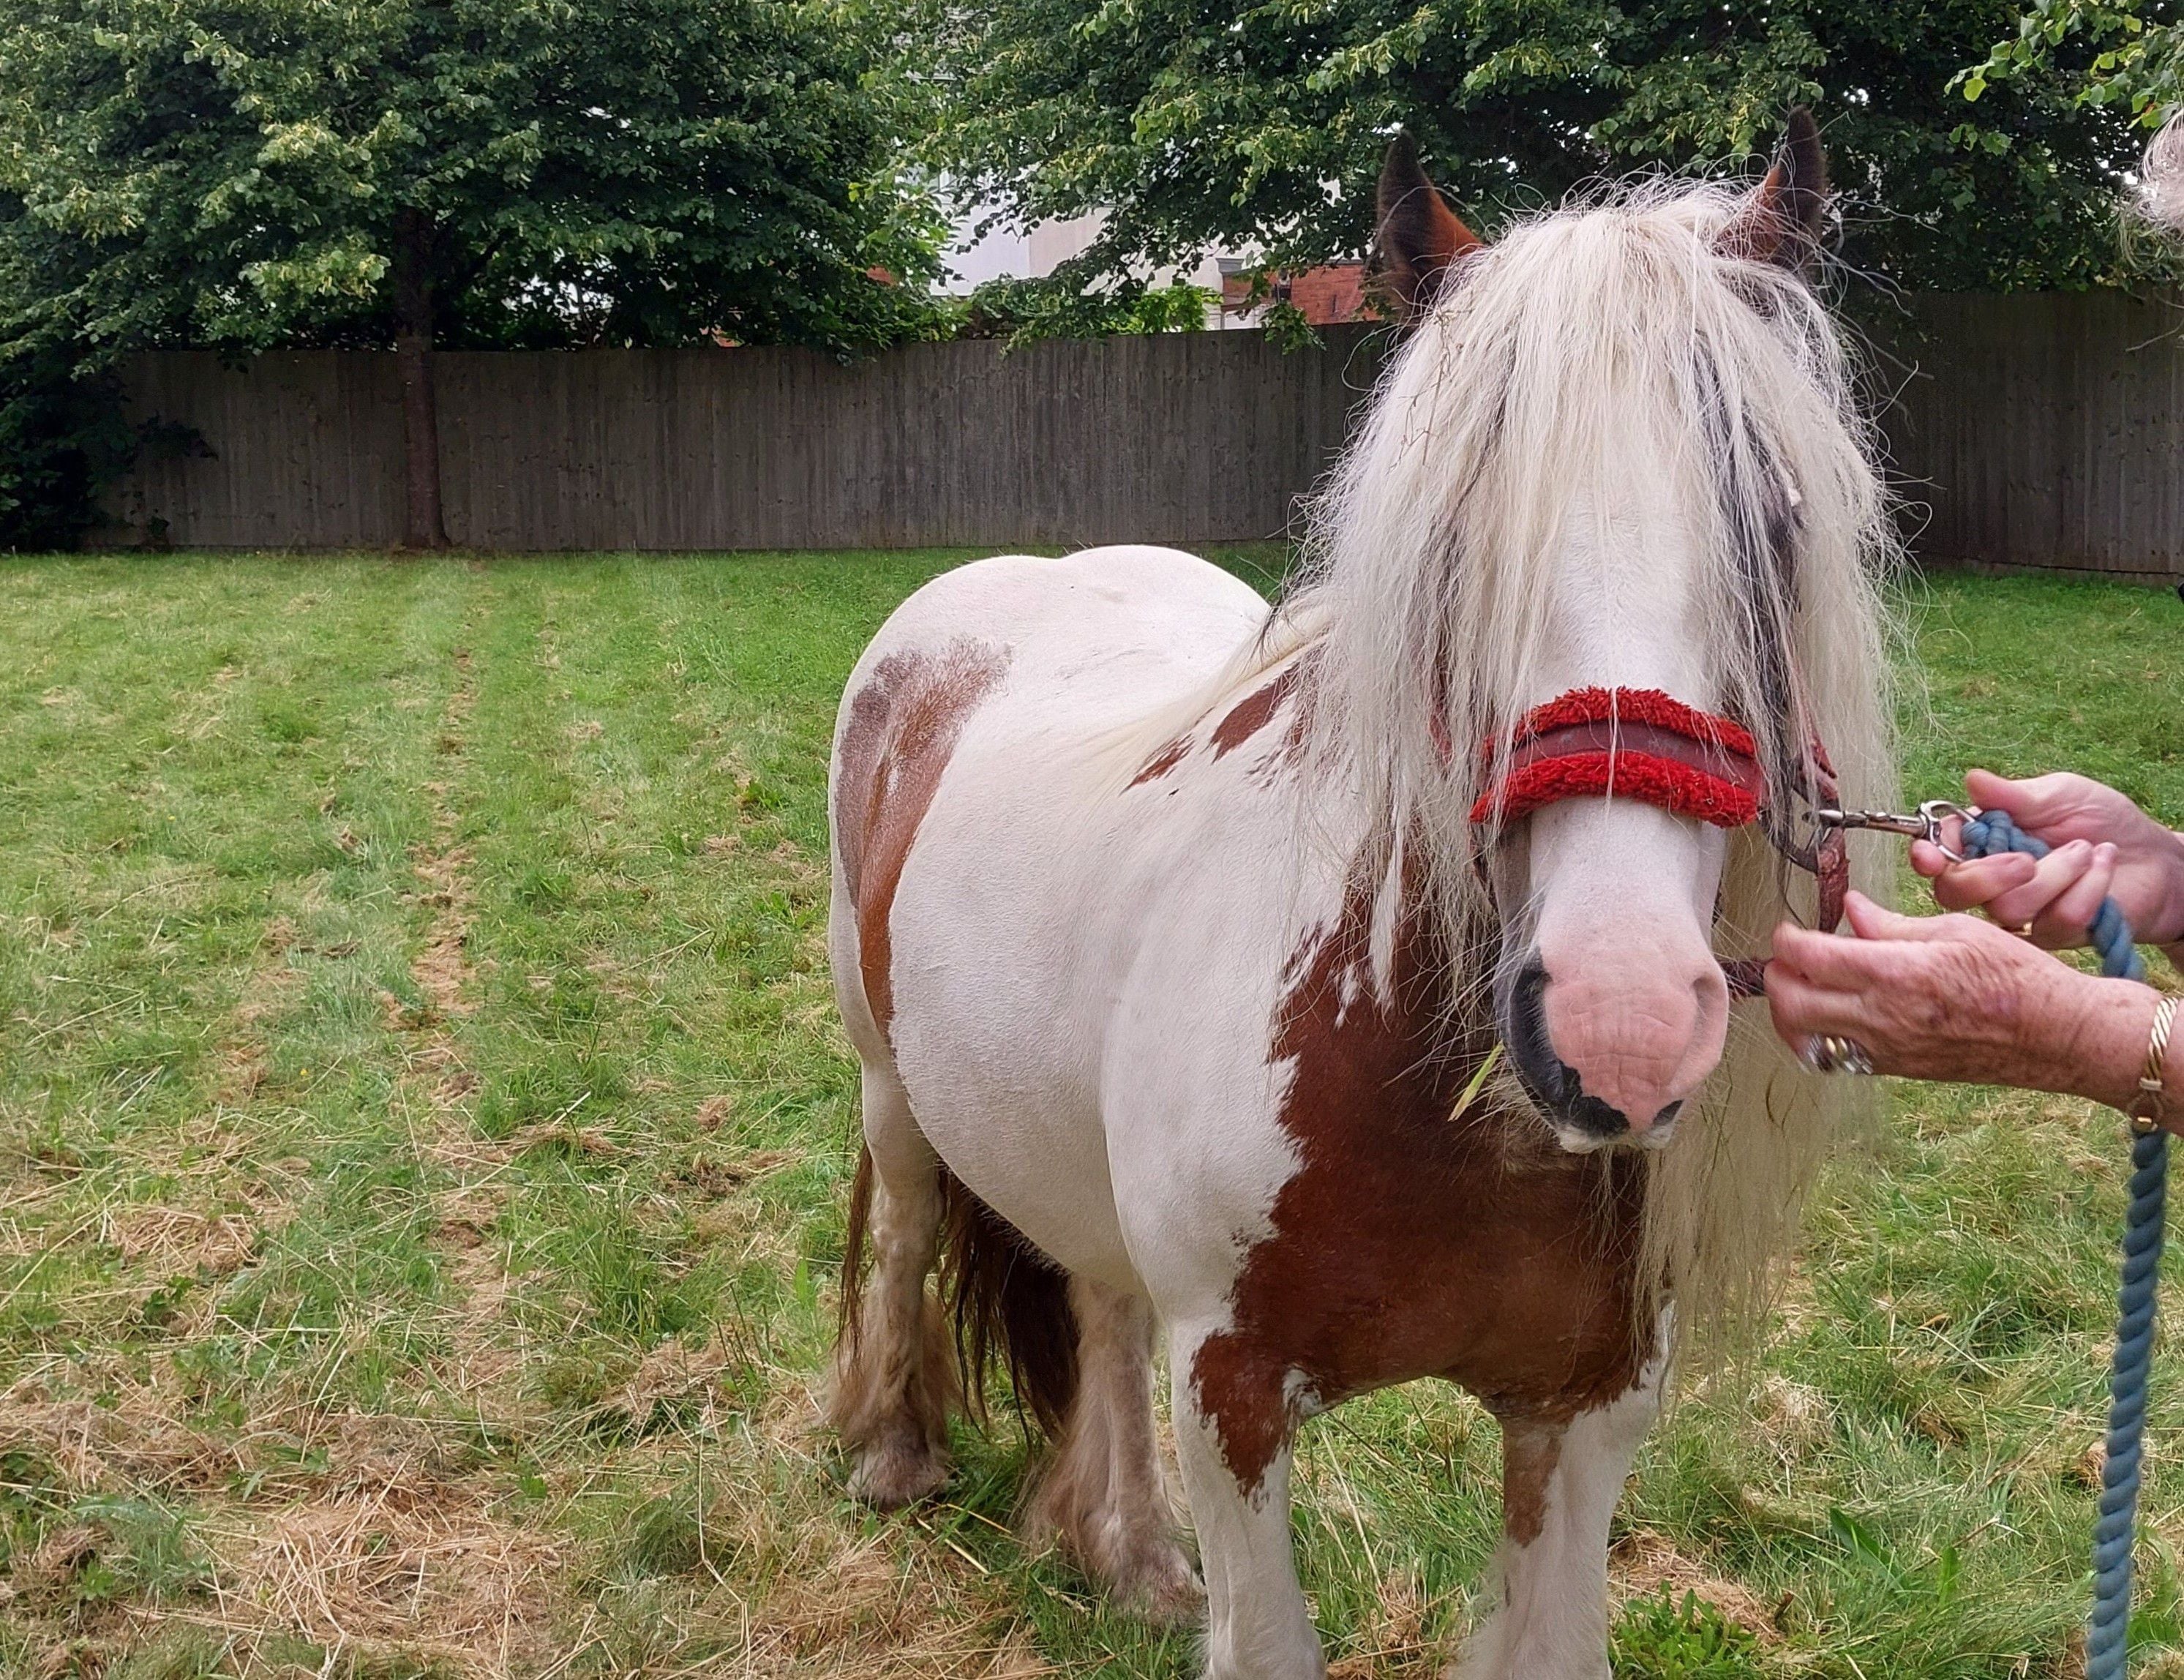 Neigh way! Wolverhampton police discover a horse in their backyard